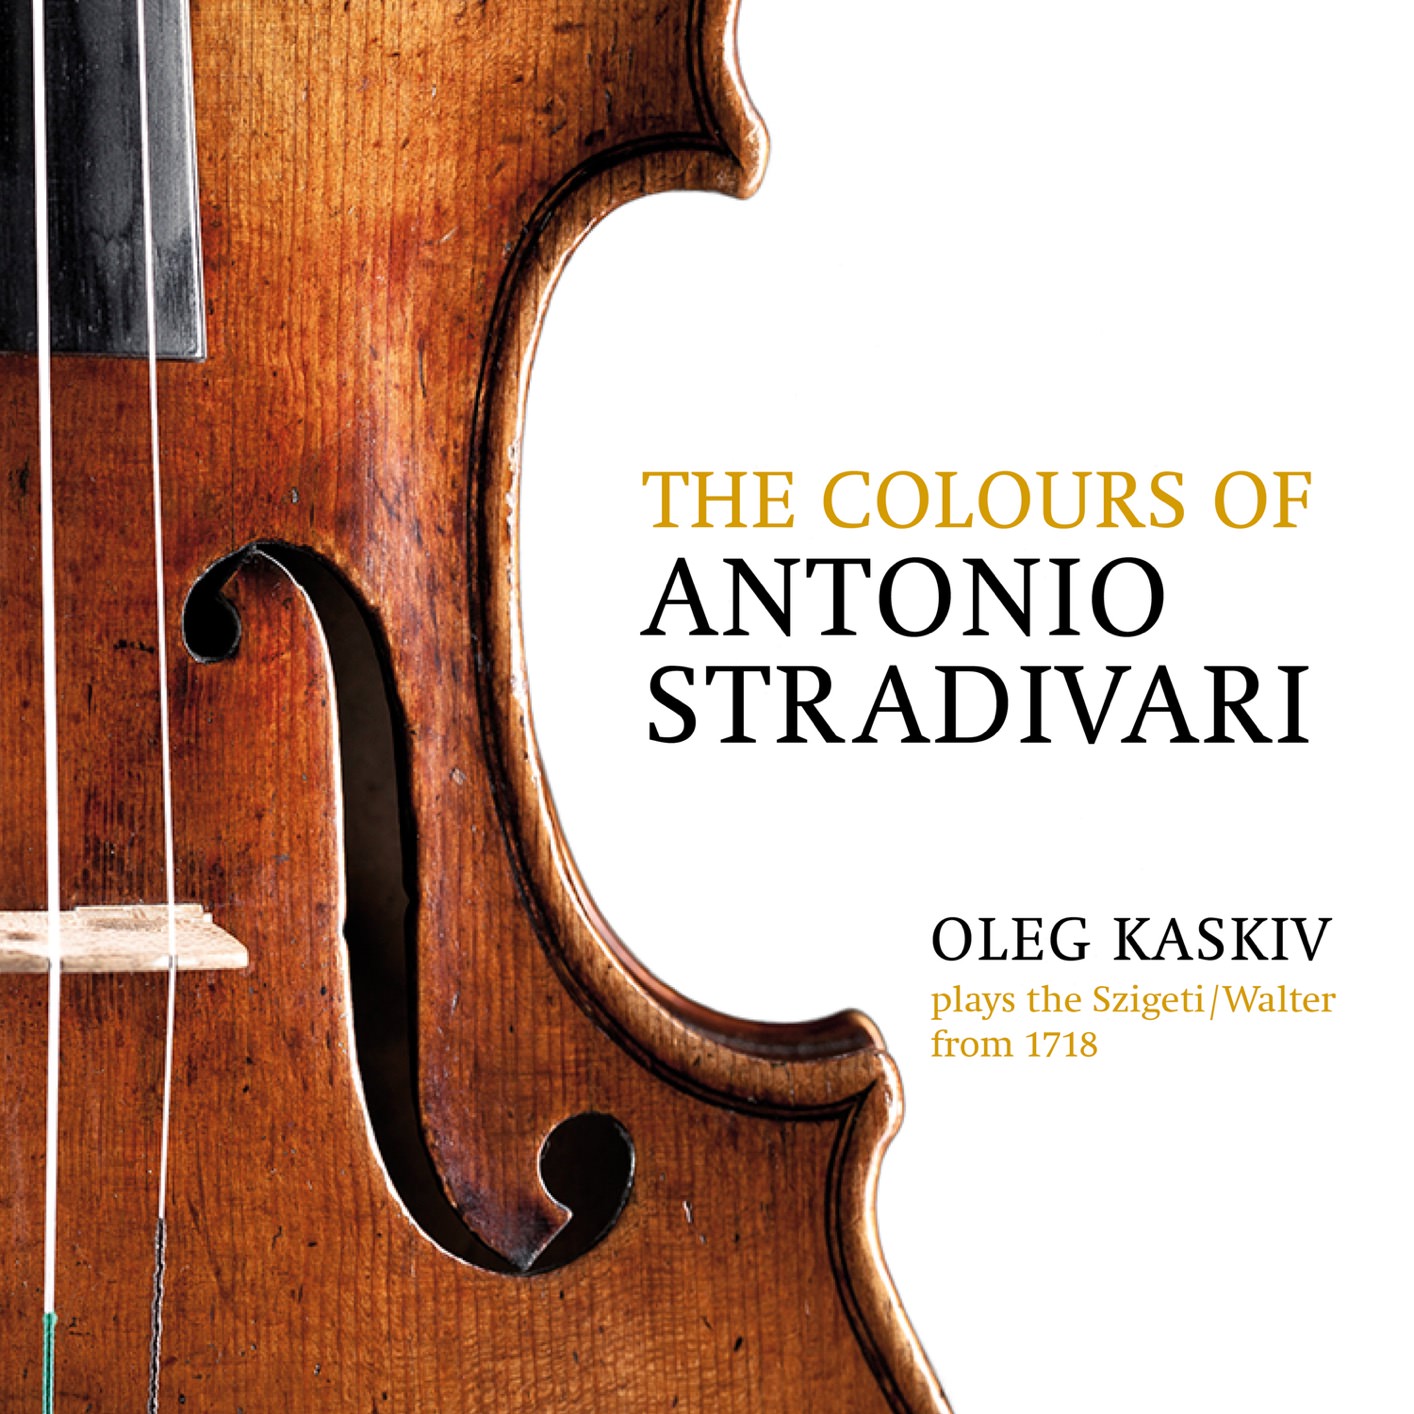 Oleg Kaskiv - The Colours of Antonio Stradivari, Oleg Kaskiv Plays the Szigeti/Walter from 1718 (2012/2018) [FLAC 24bit/96kHz]